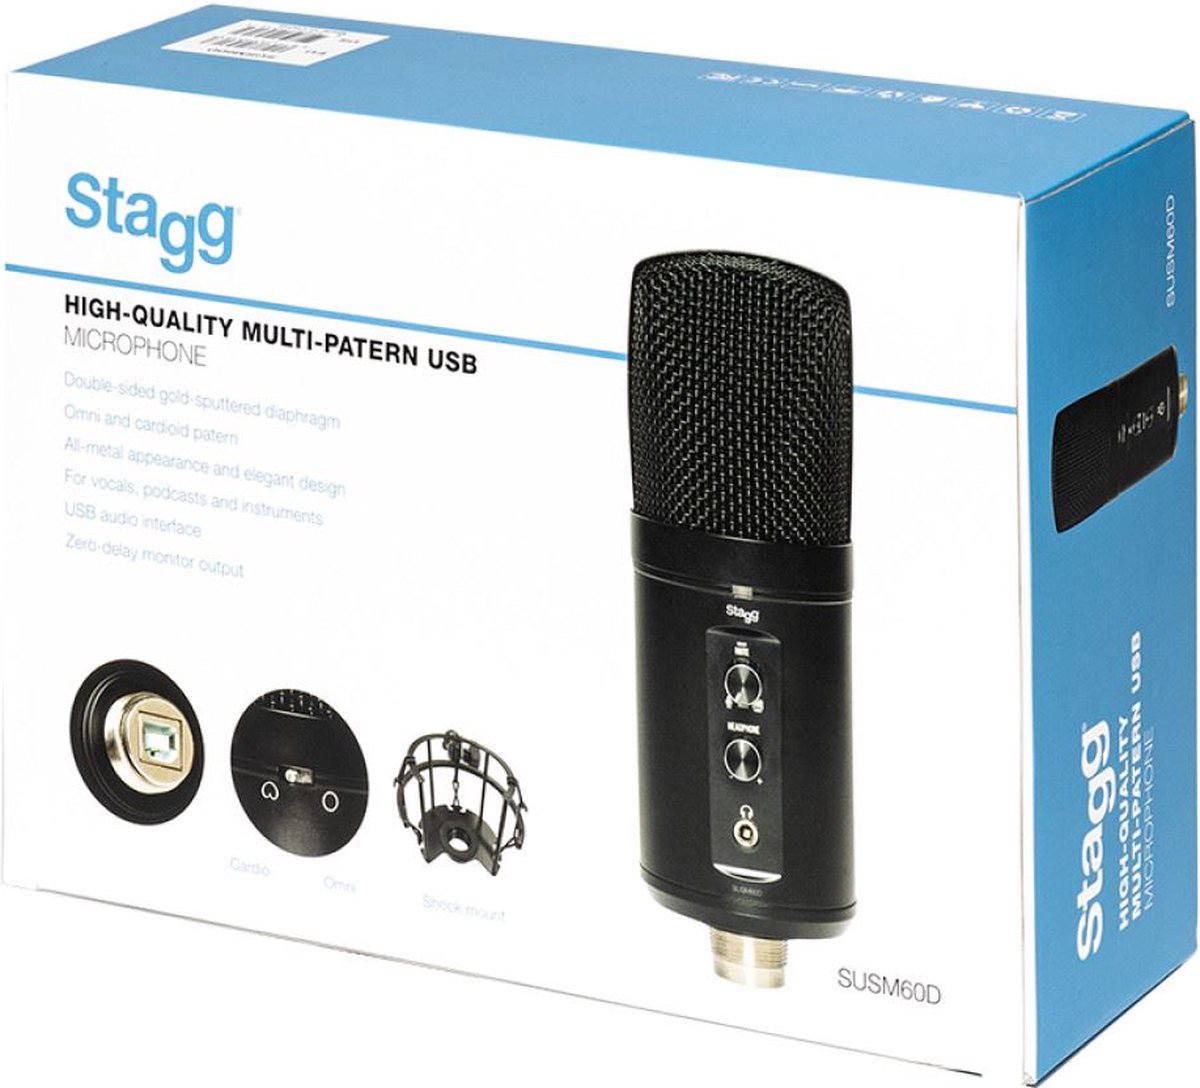 Stagg SUSM60D - USB Studio condensator microfoon